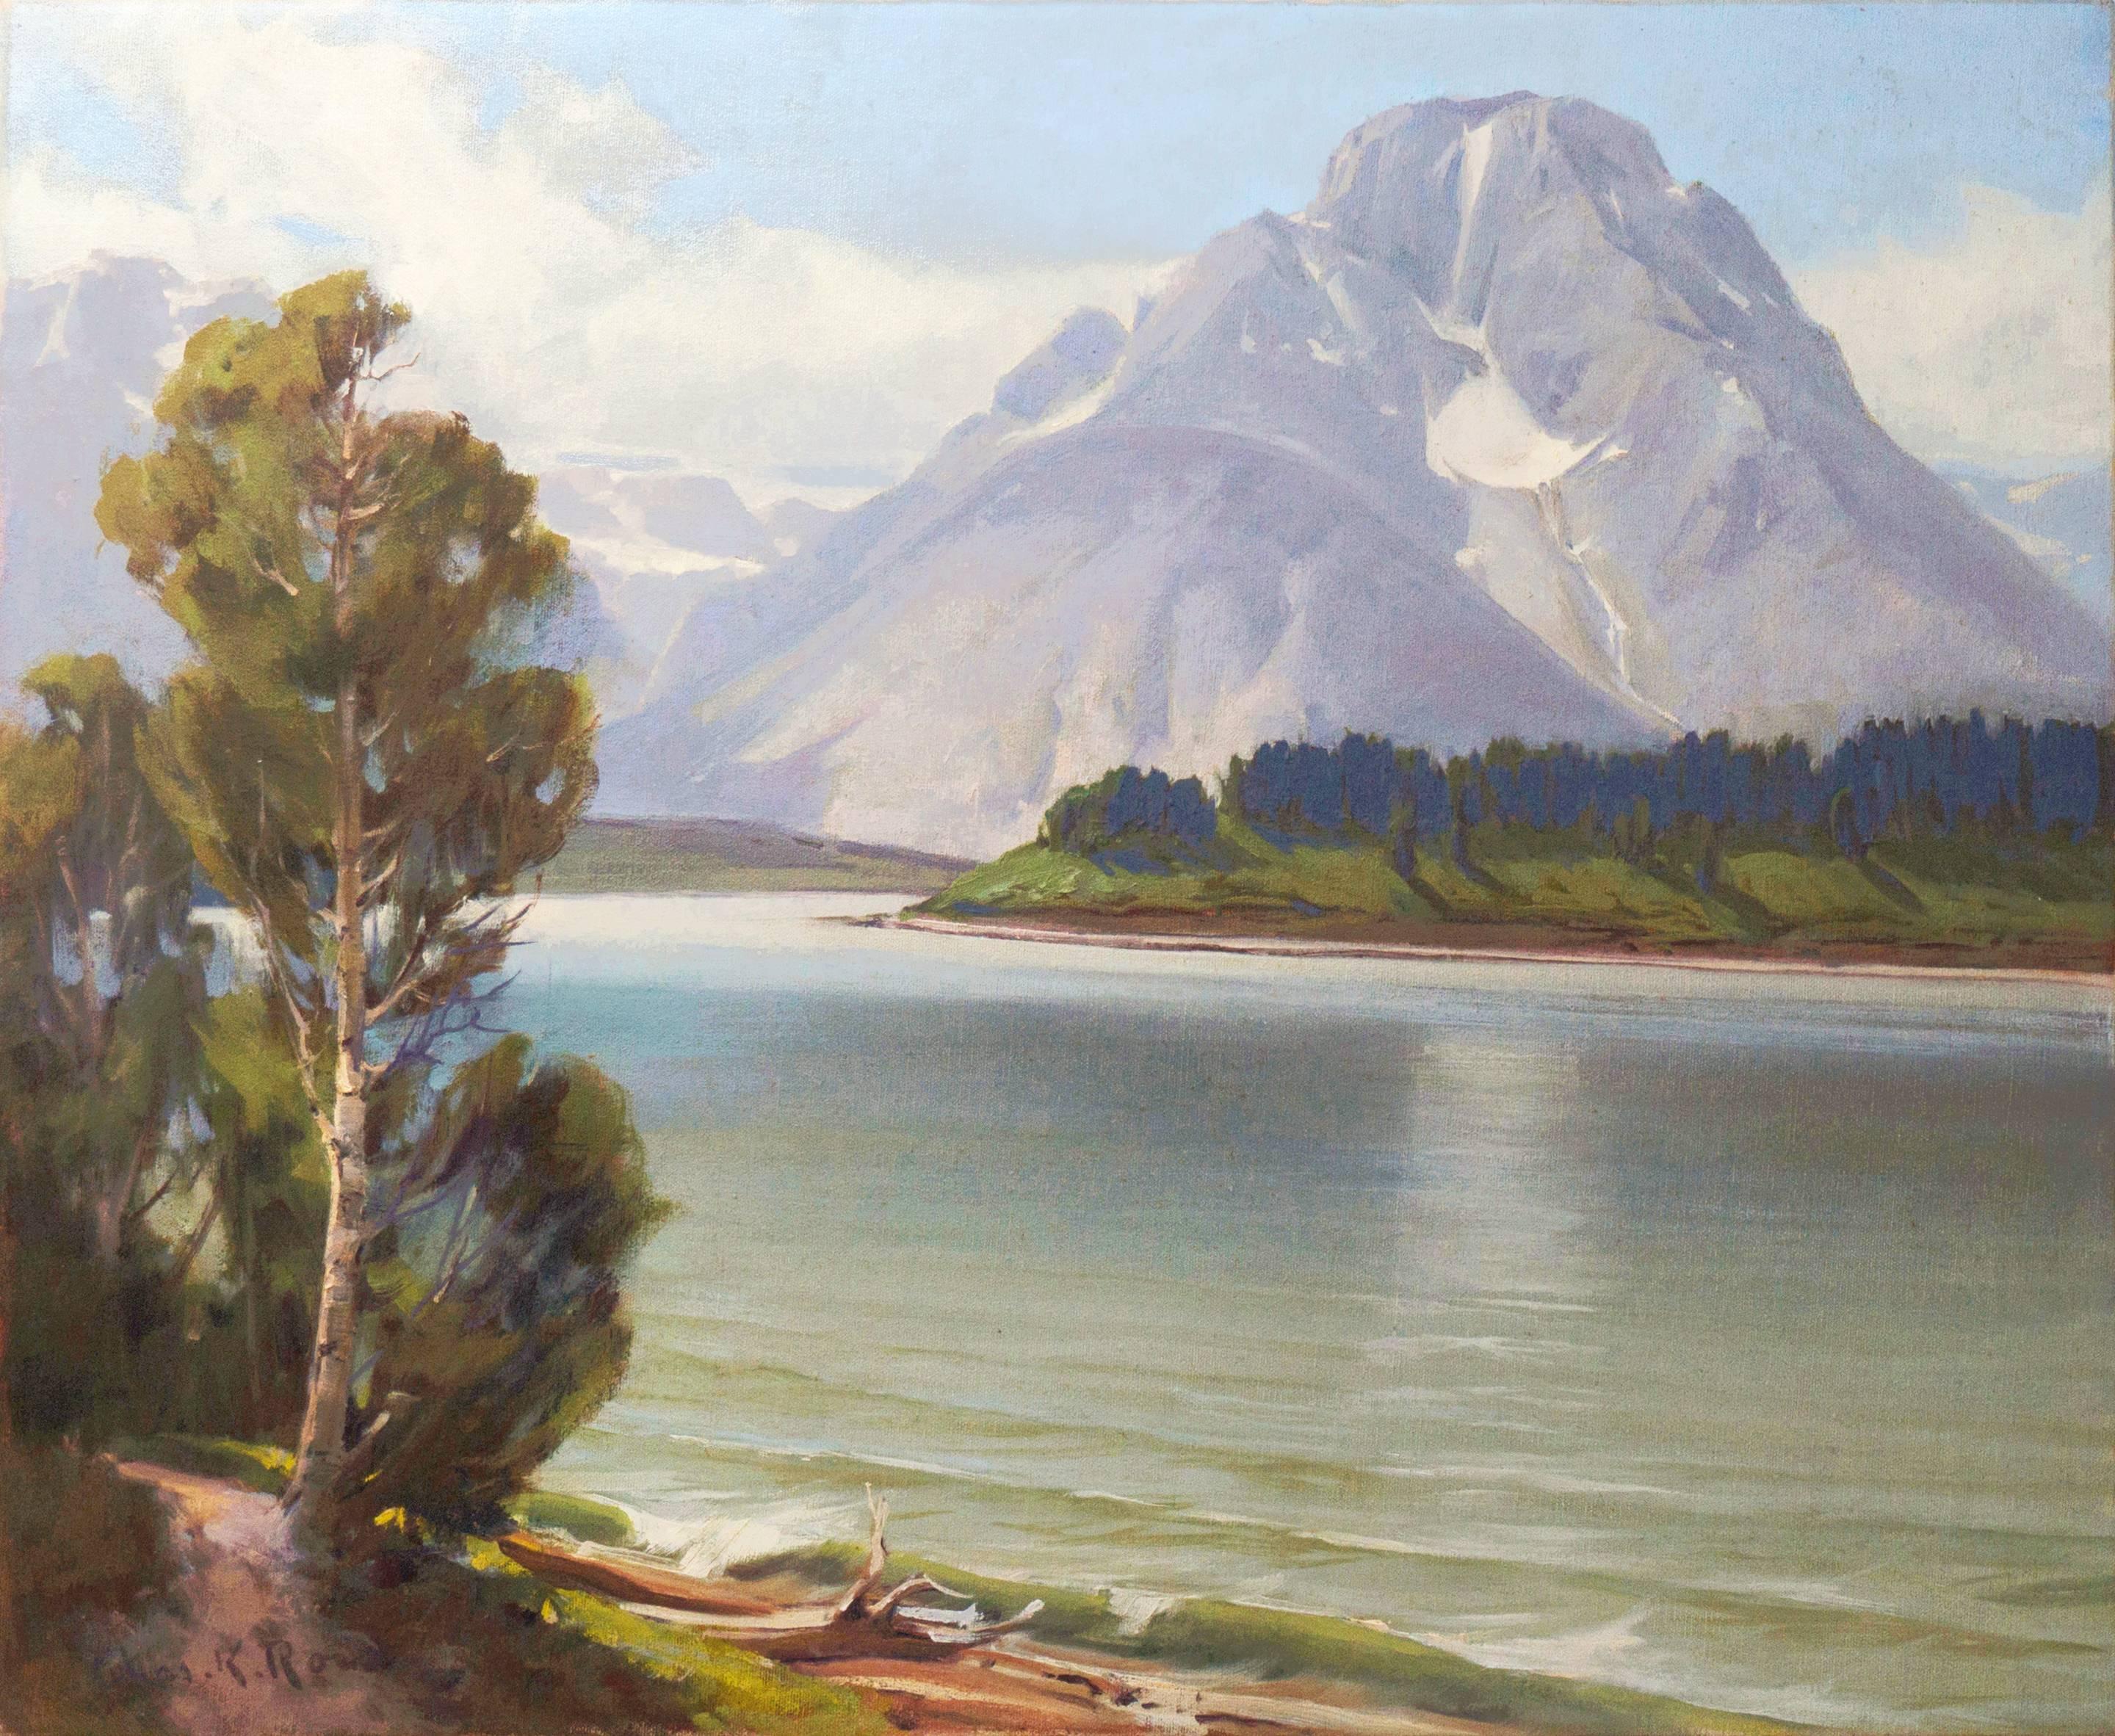 Charles K. Ross Landscape Painting - 'Sunshine in the High Sierras', California Mountain Landscape, Danish American